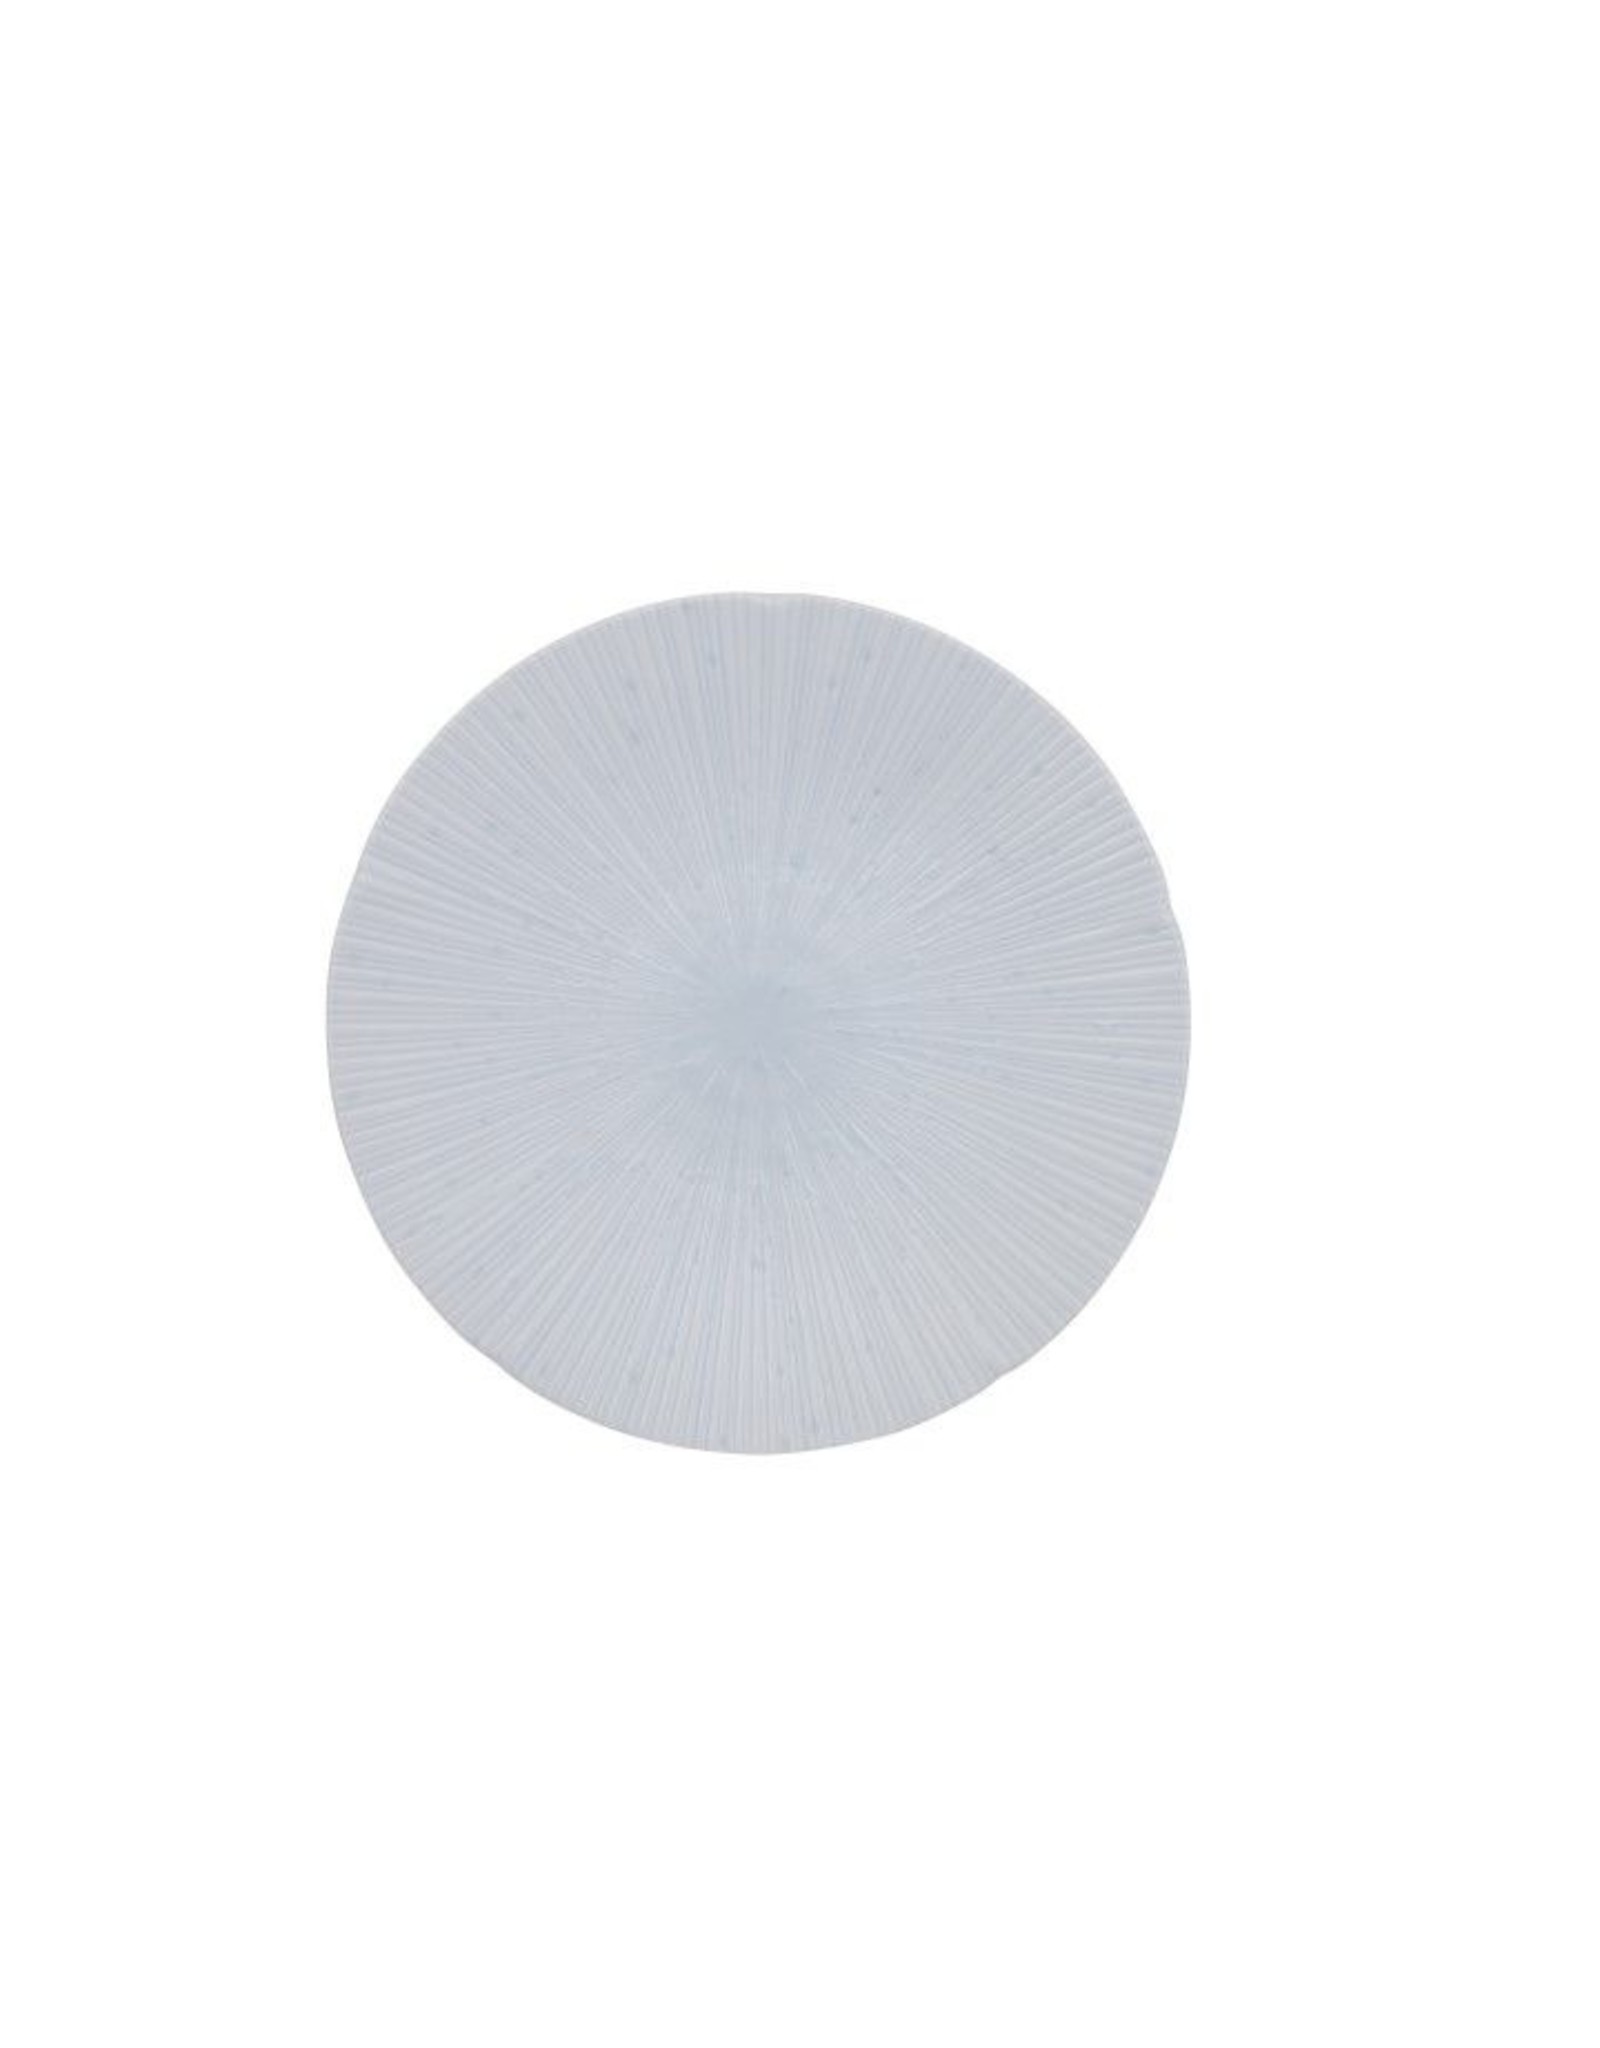 Tokyo Design Studio Sky White porcelain Plate 29.7cm